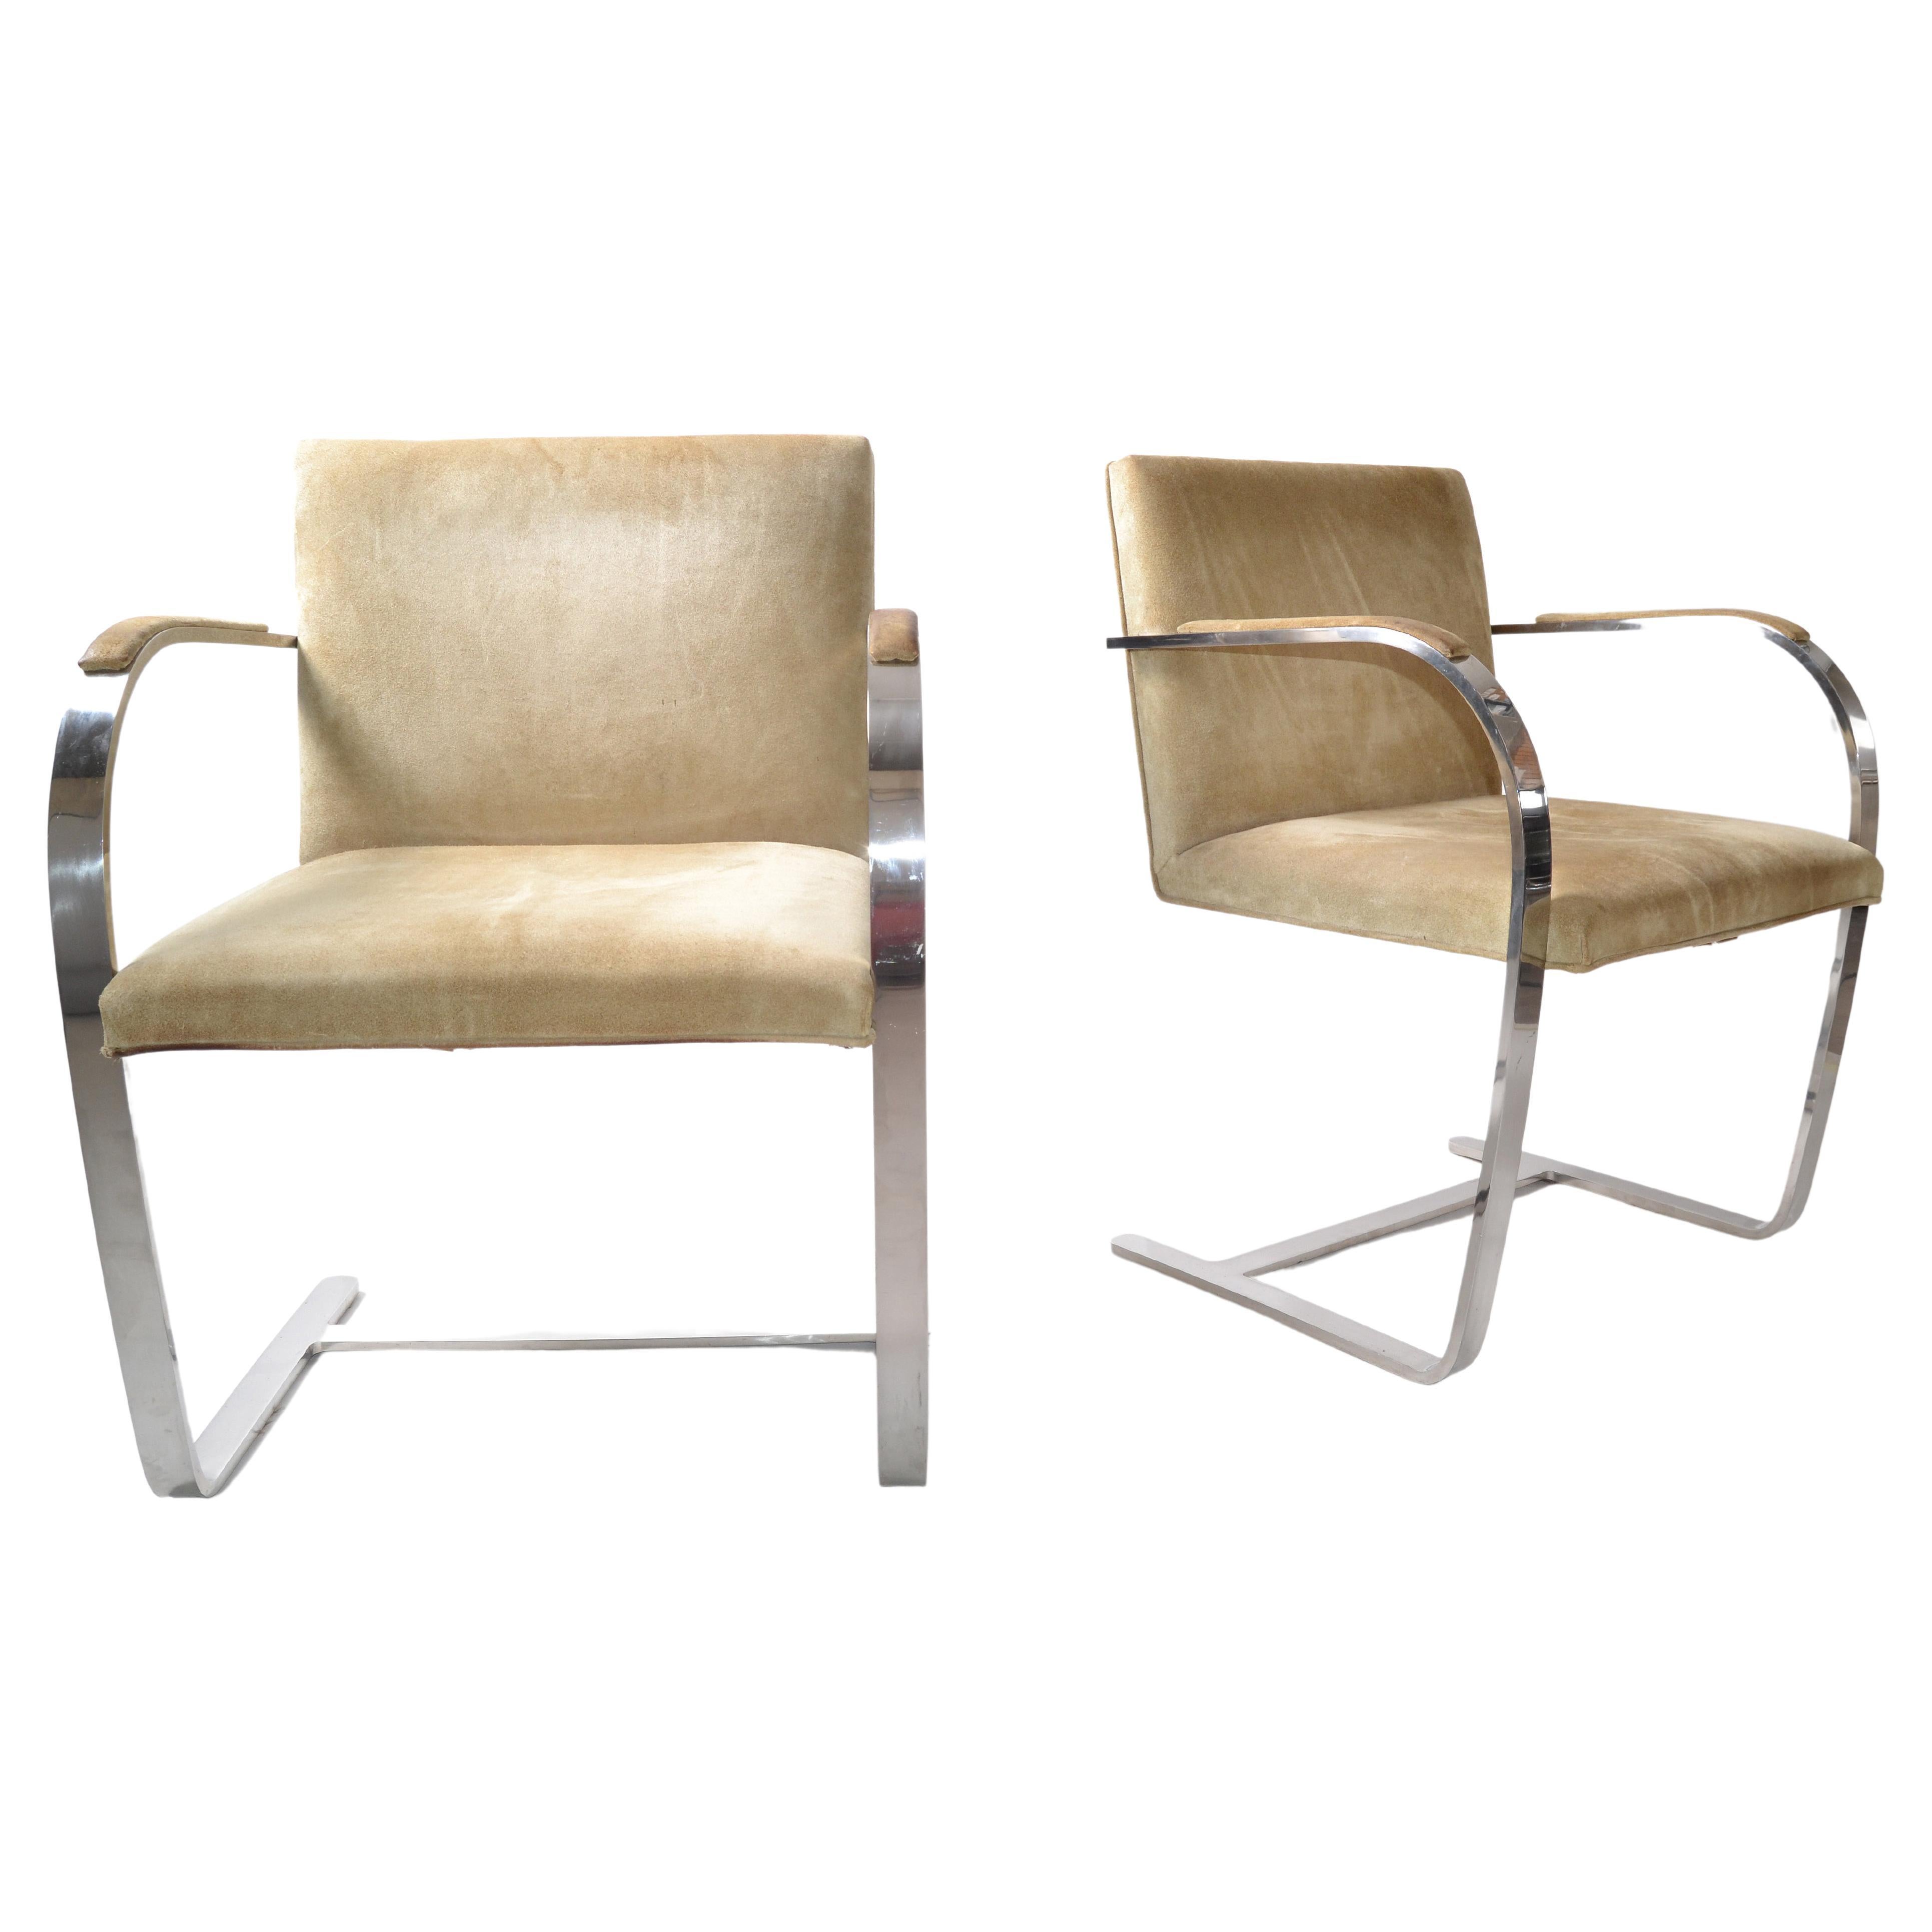 Mies Van Der Rohe For Knoll Beige Ultrasuede Stainless Steel Brno Chairs, Pair 